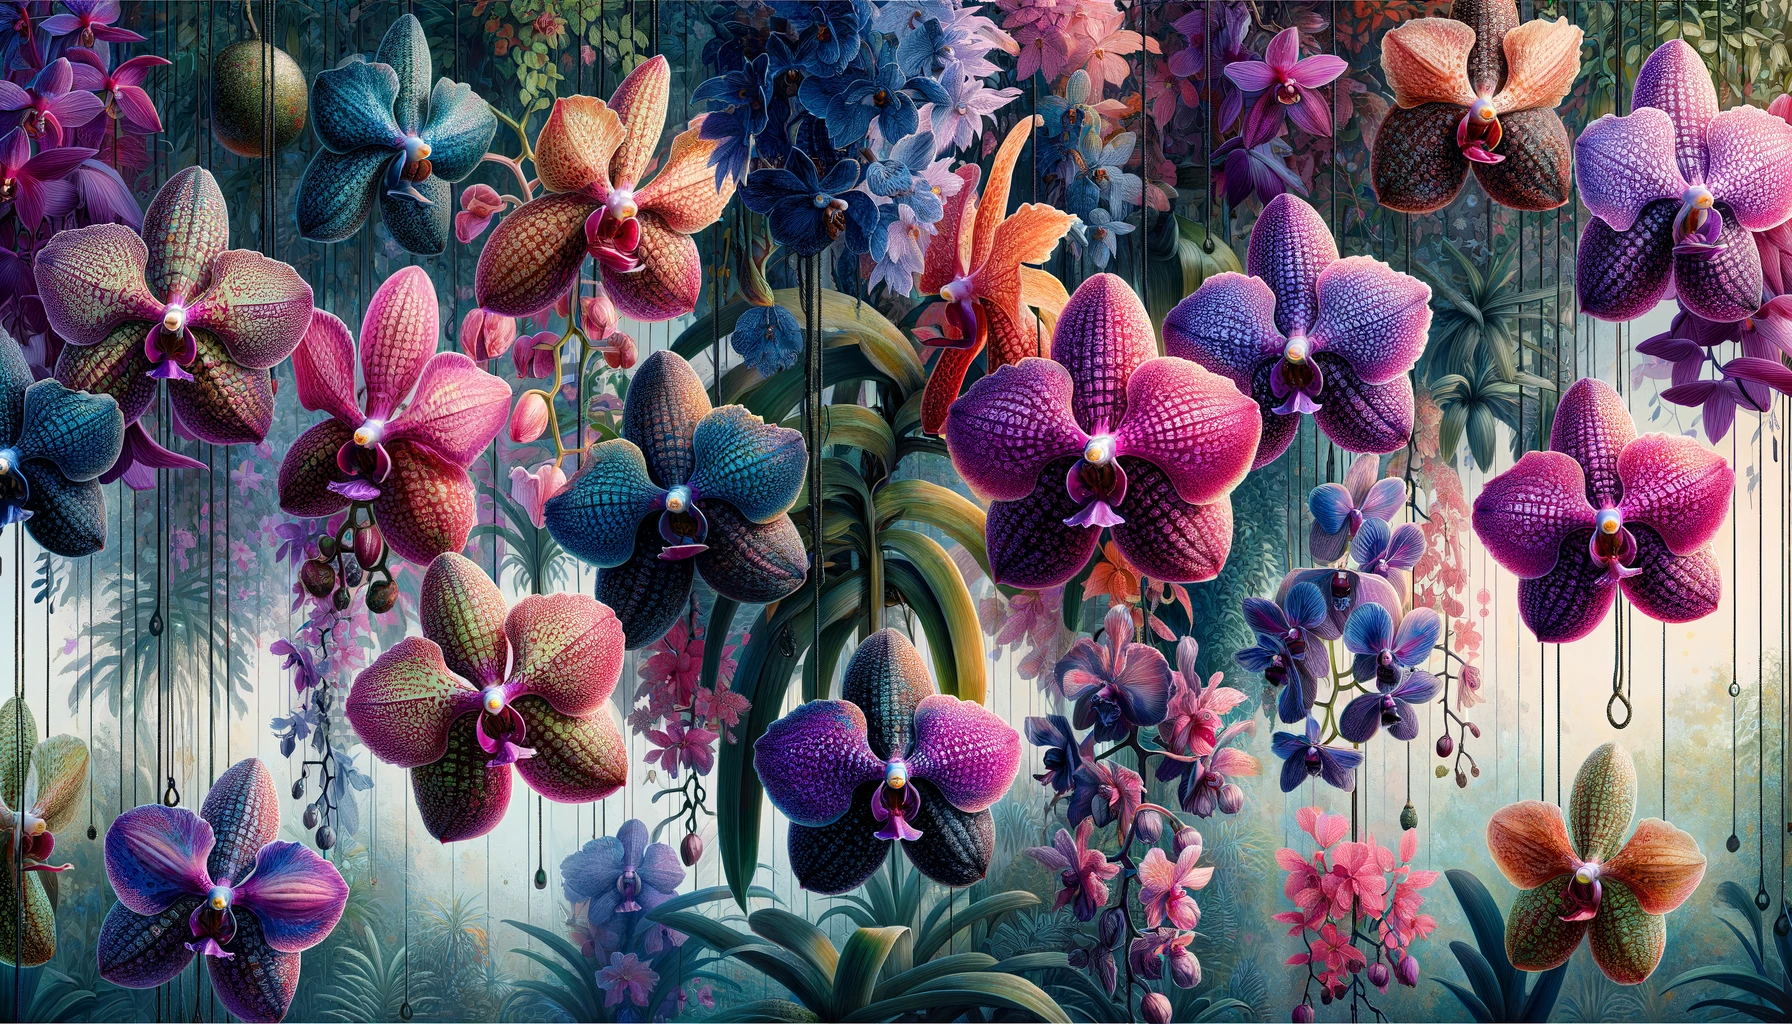 Types of Vanda Orchids